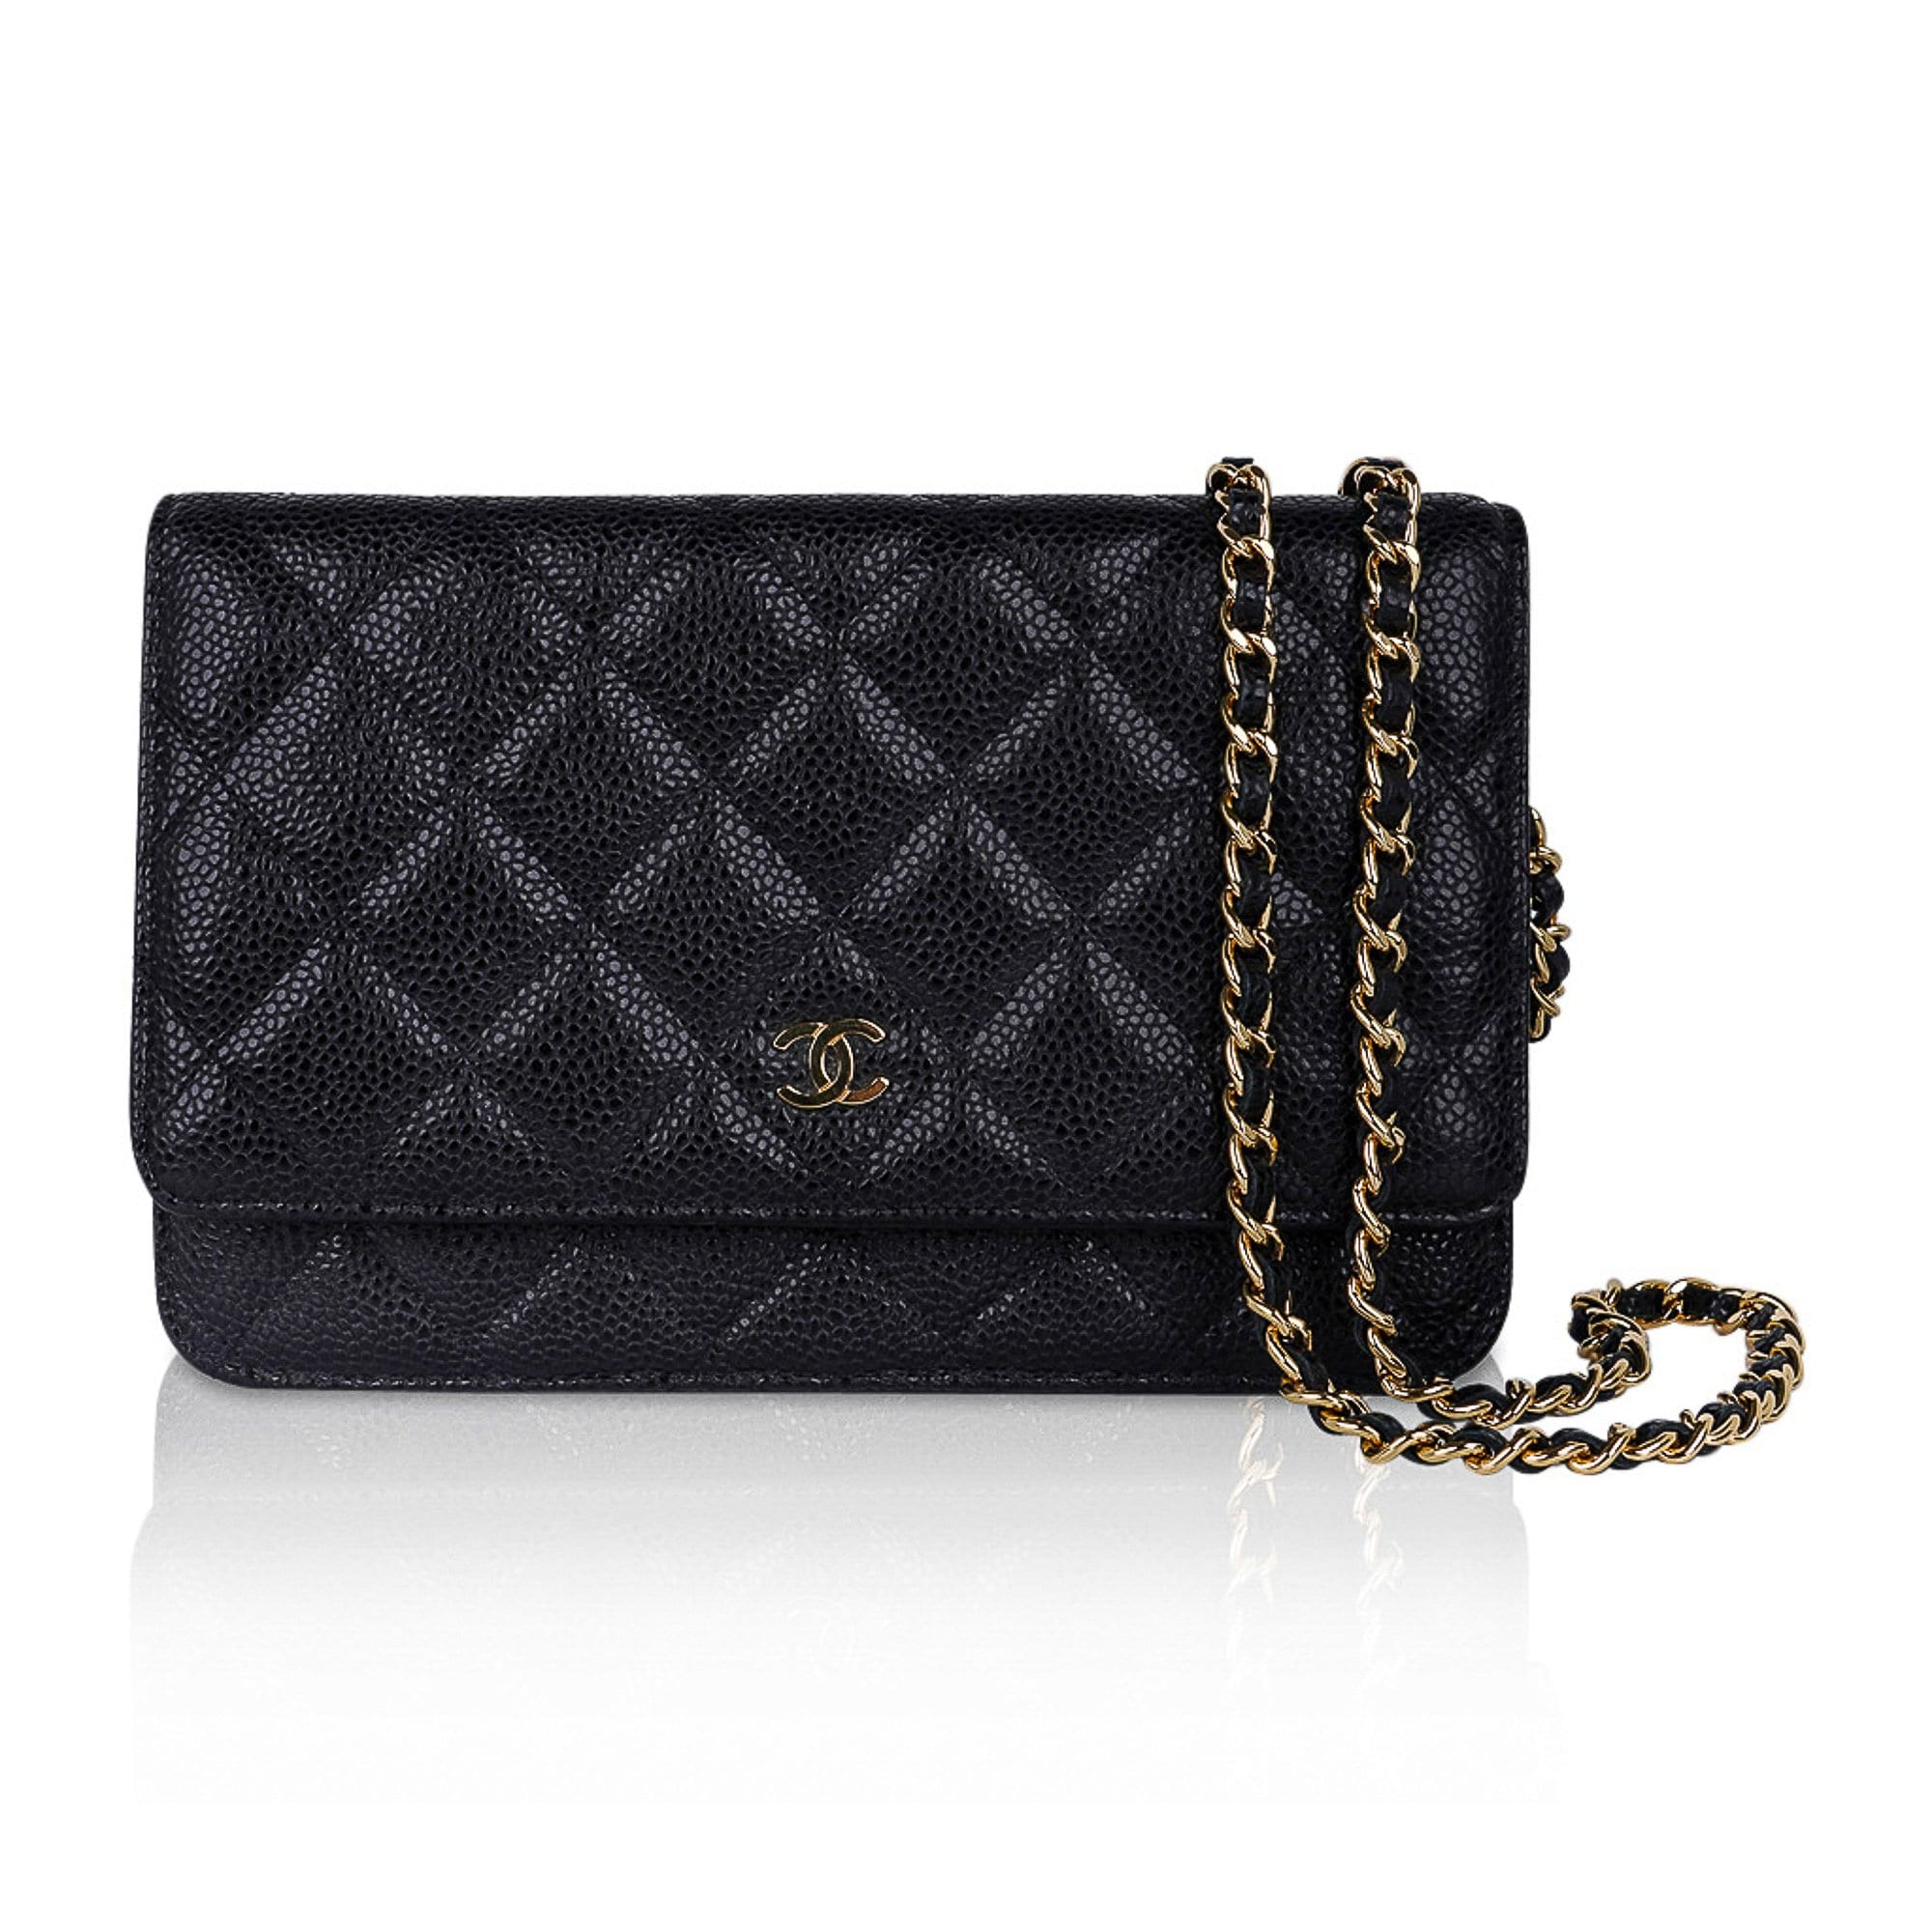 chanel black crossbody purse leather